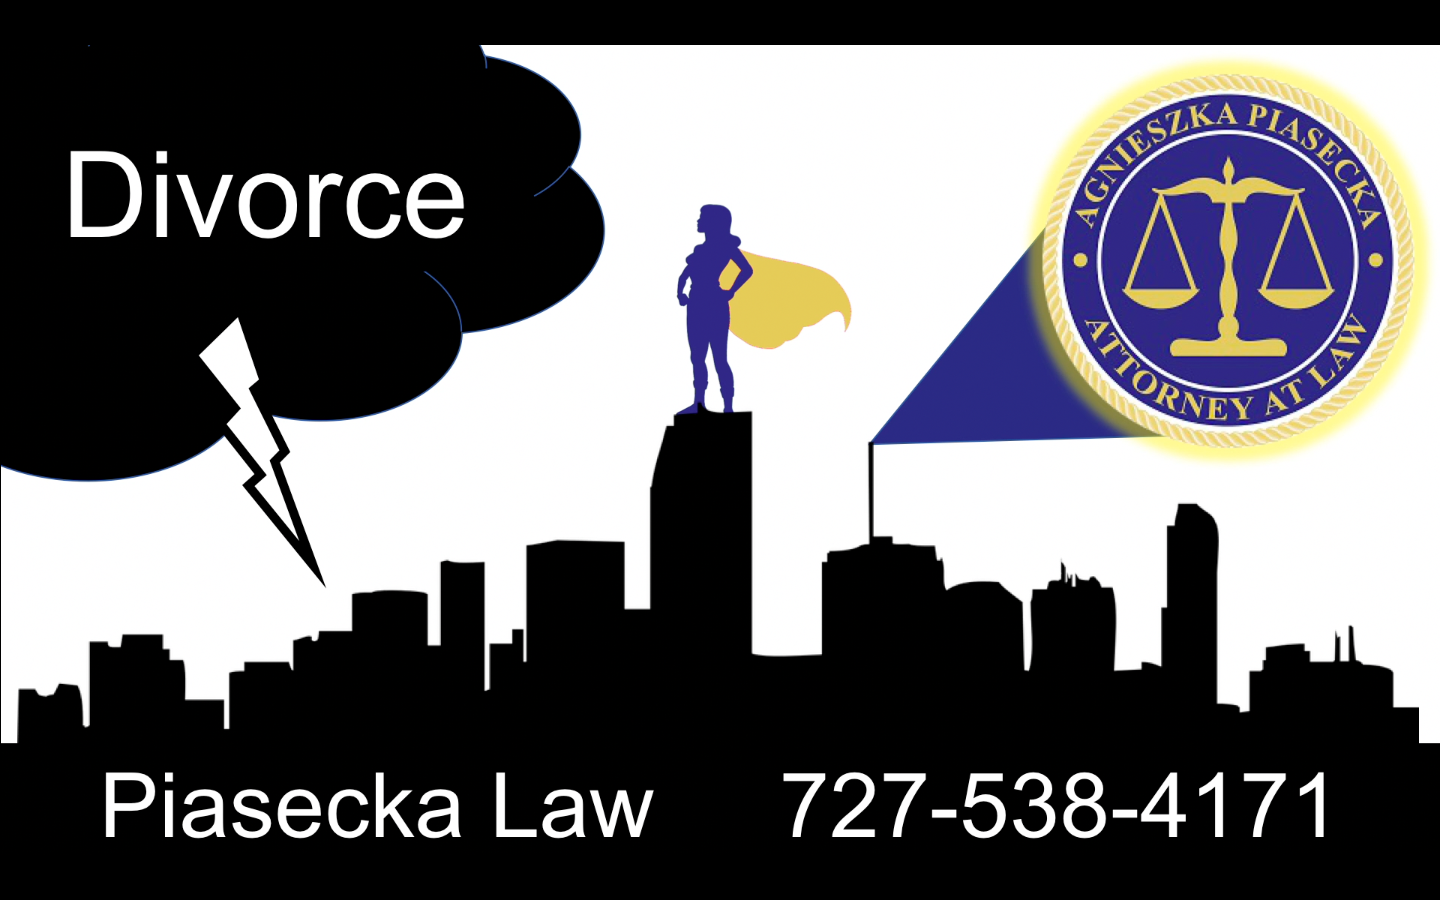 Divorce Florida 727-538-4171 Piasecka Law